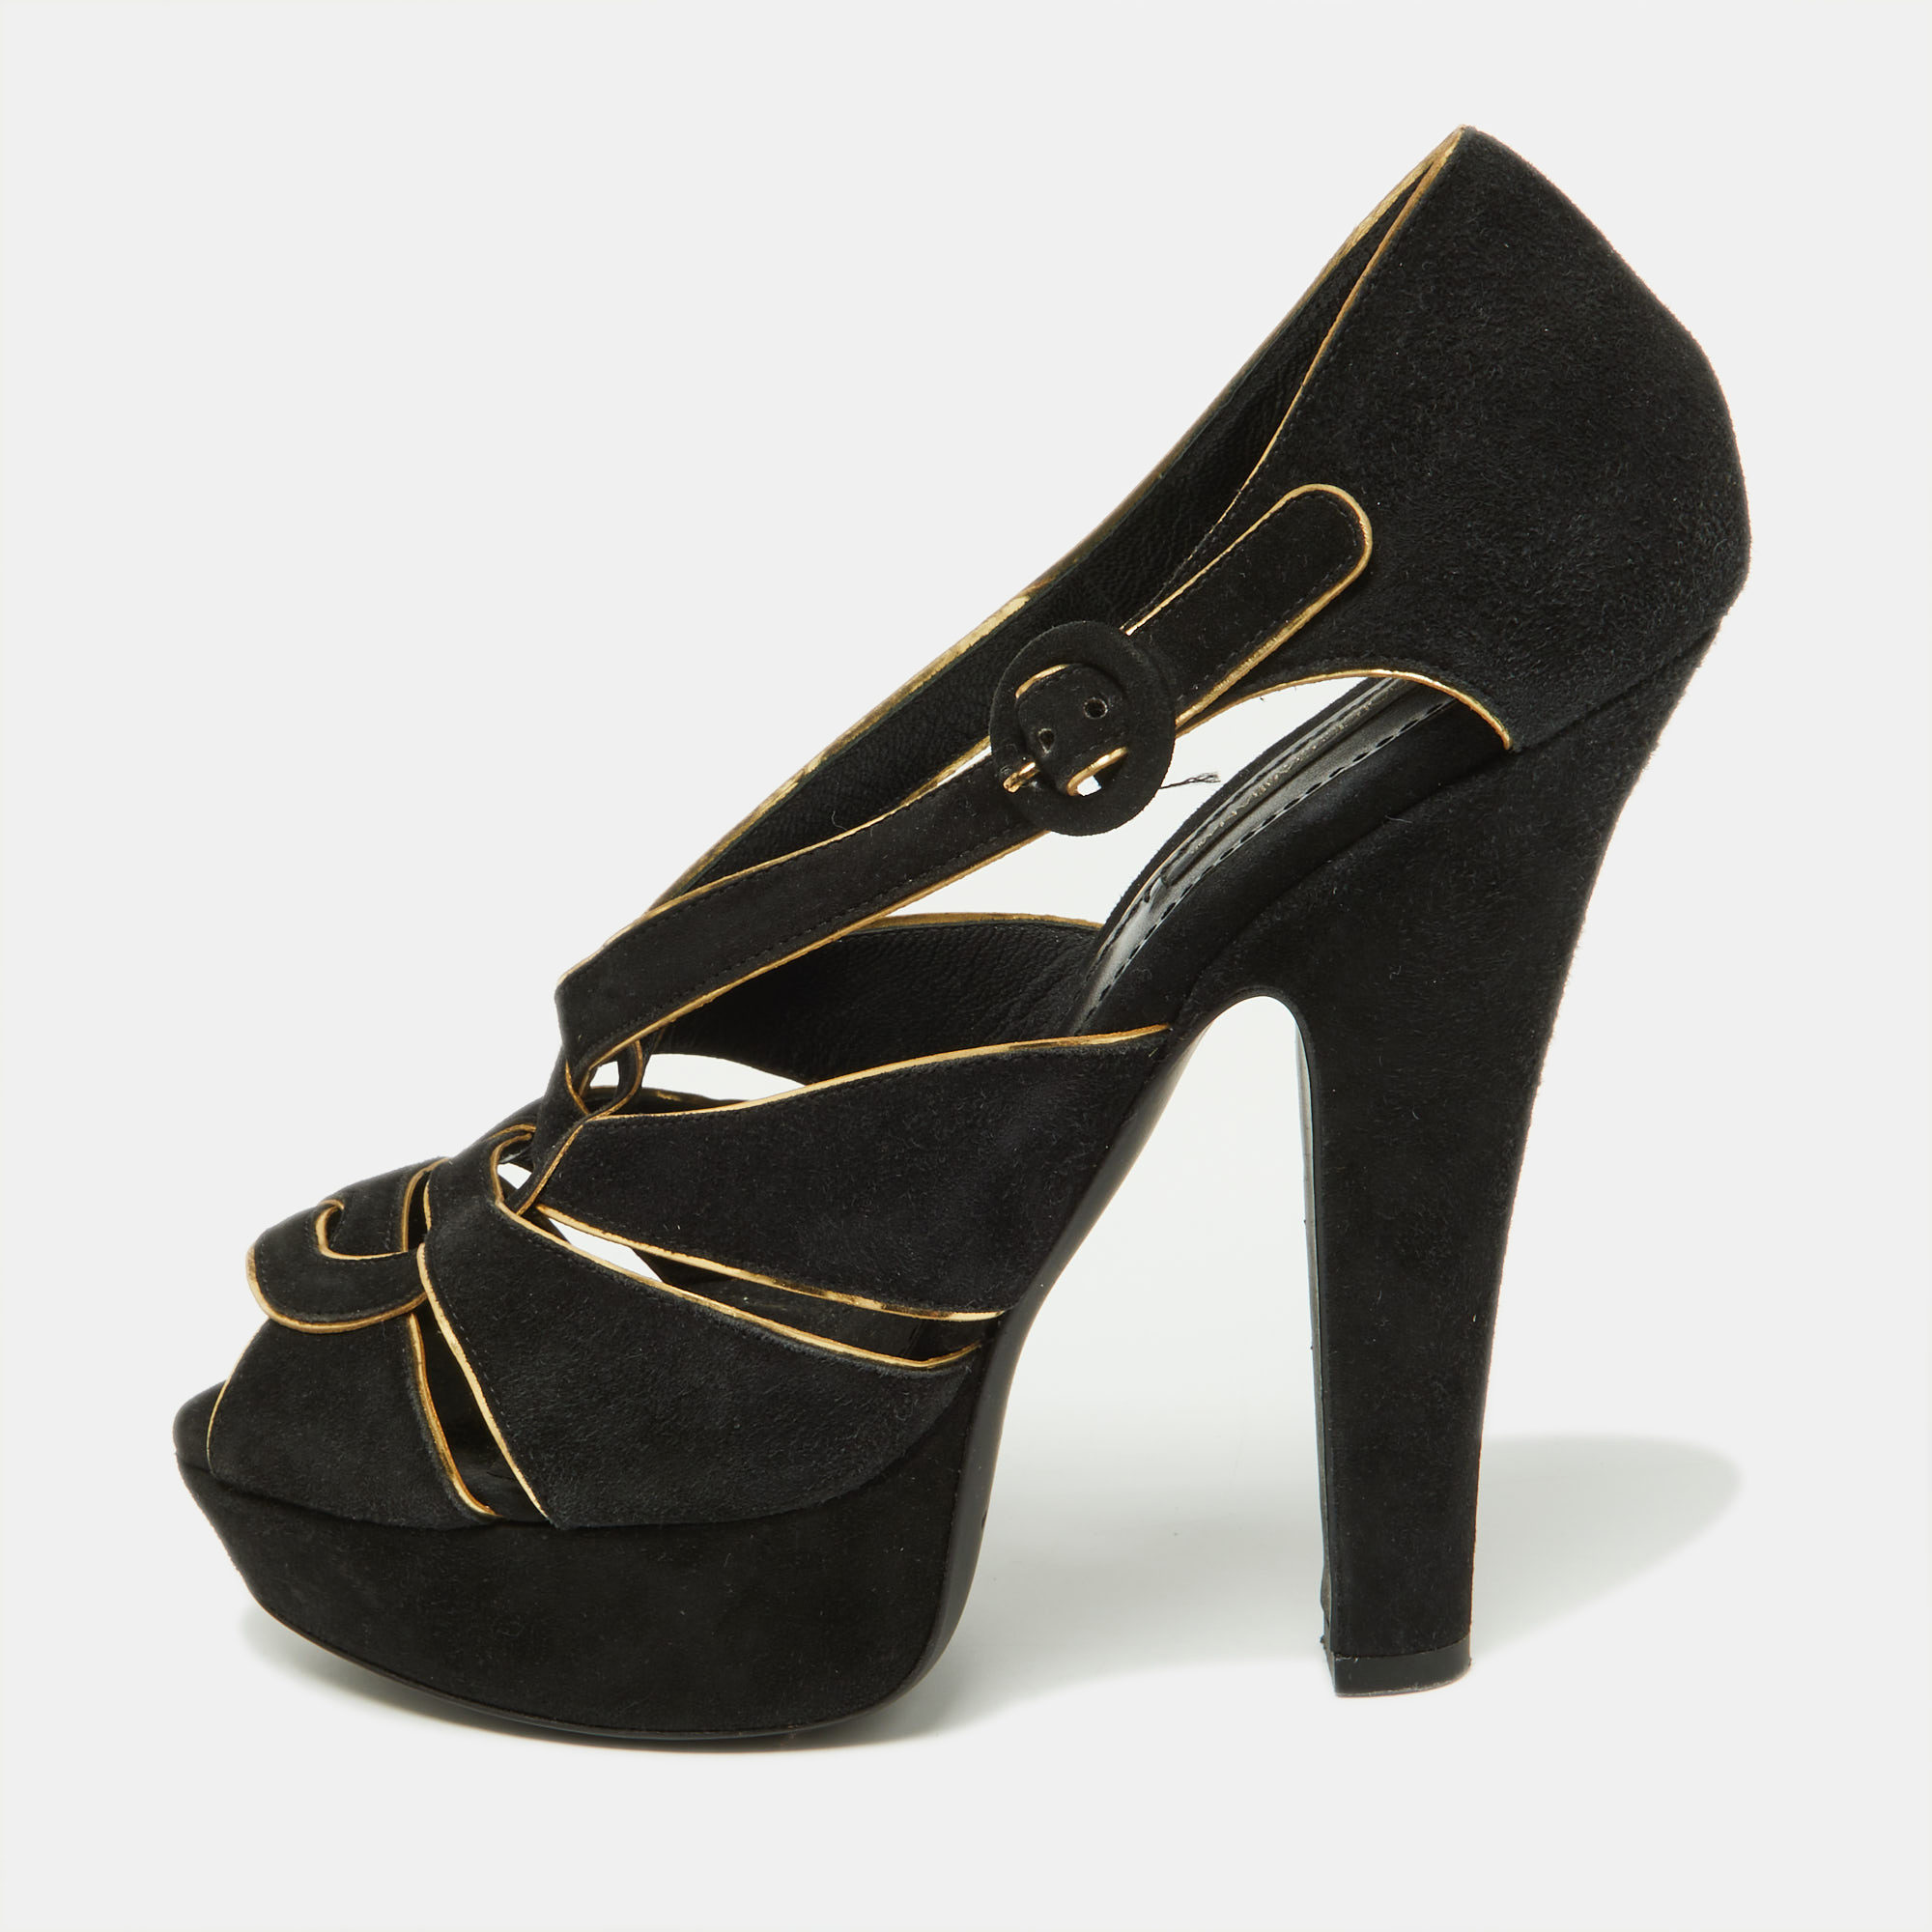 Pre-owned Dolce & Gabbana Black/gold Suede Strappy Platform Sandals Size 39